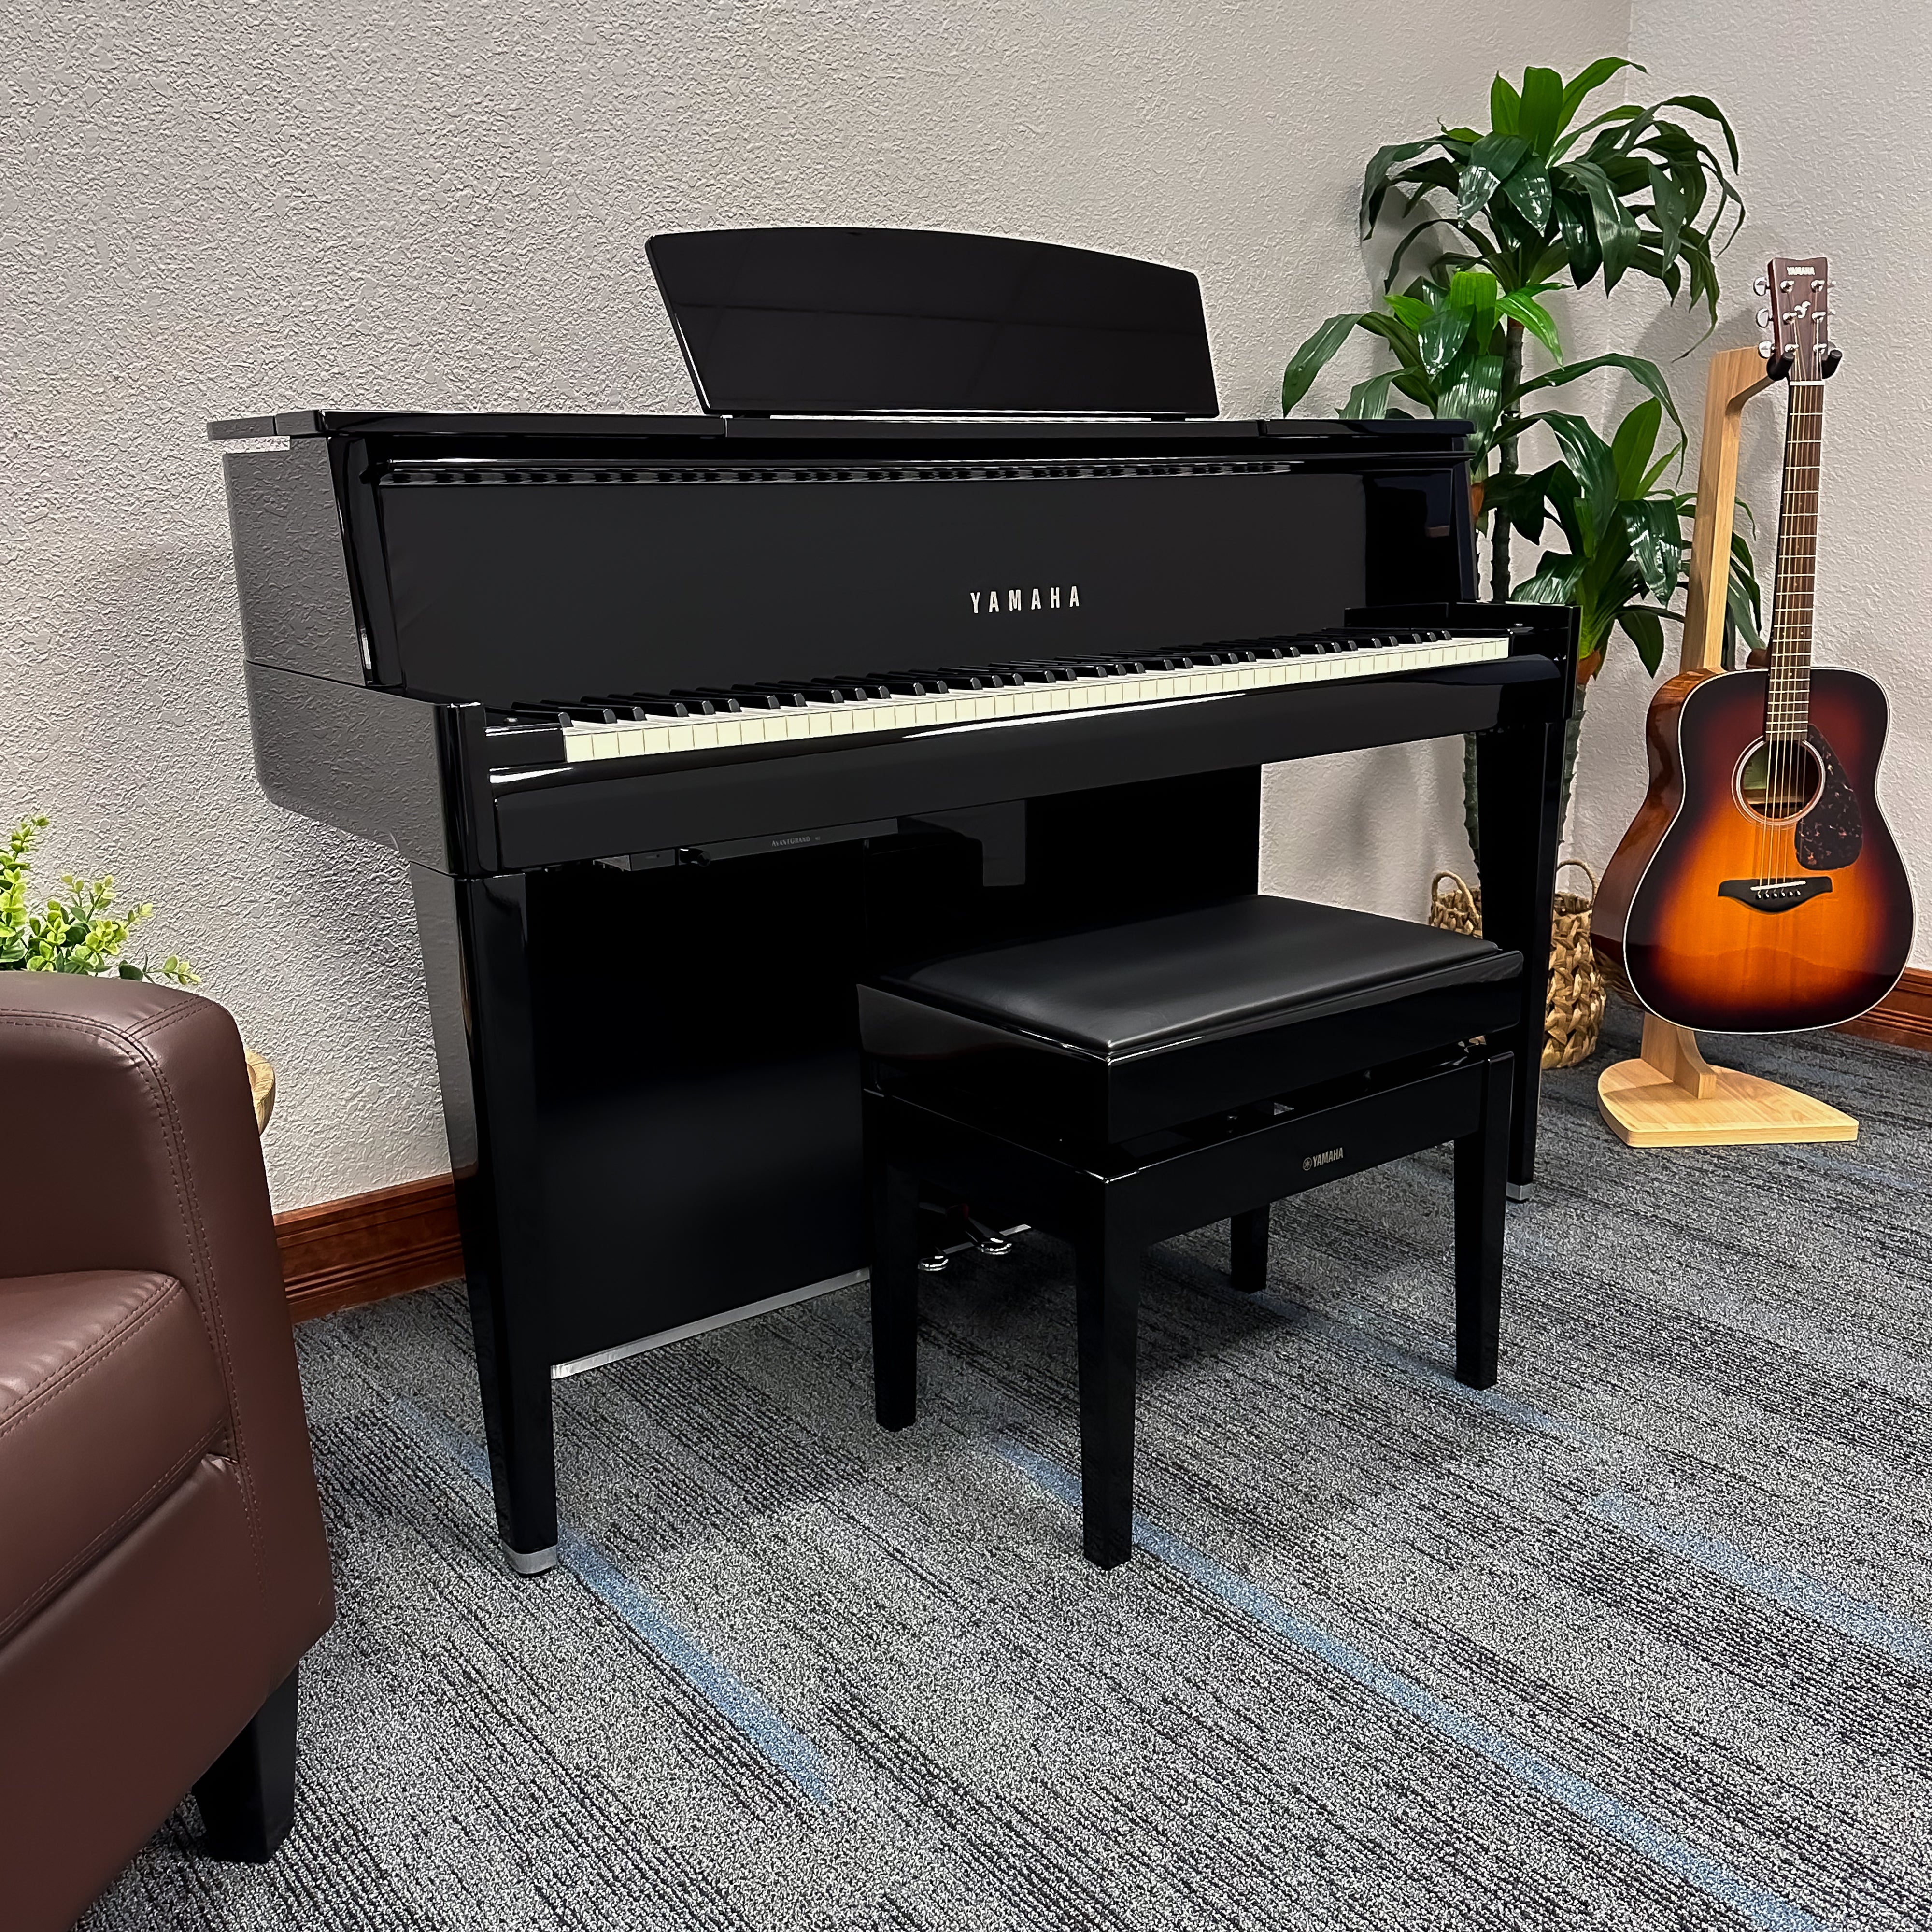 Yamaha AvantGrand N2 Hybrid Piano - Polished Ebony - in a stylish living space